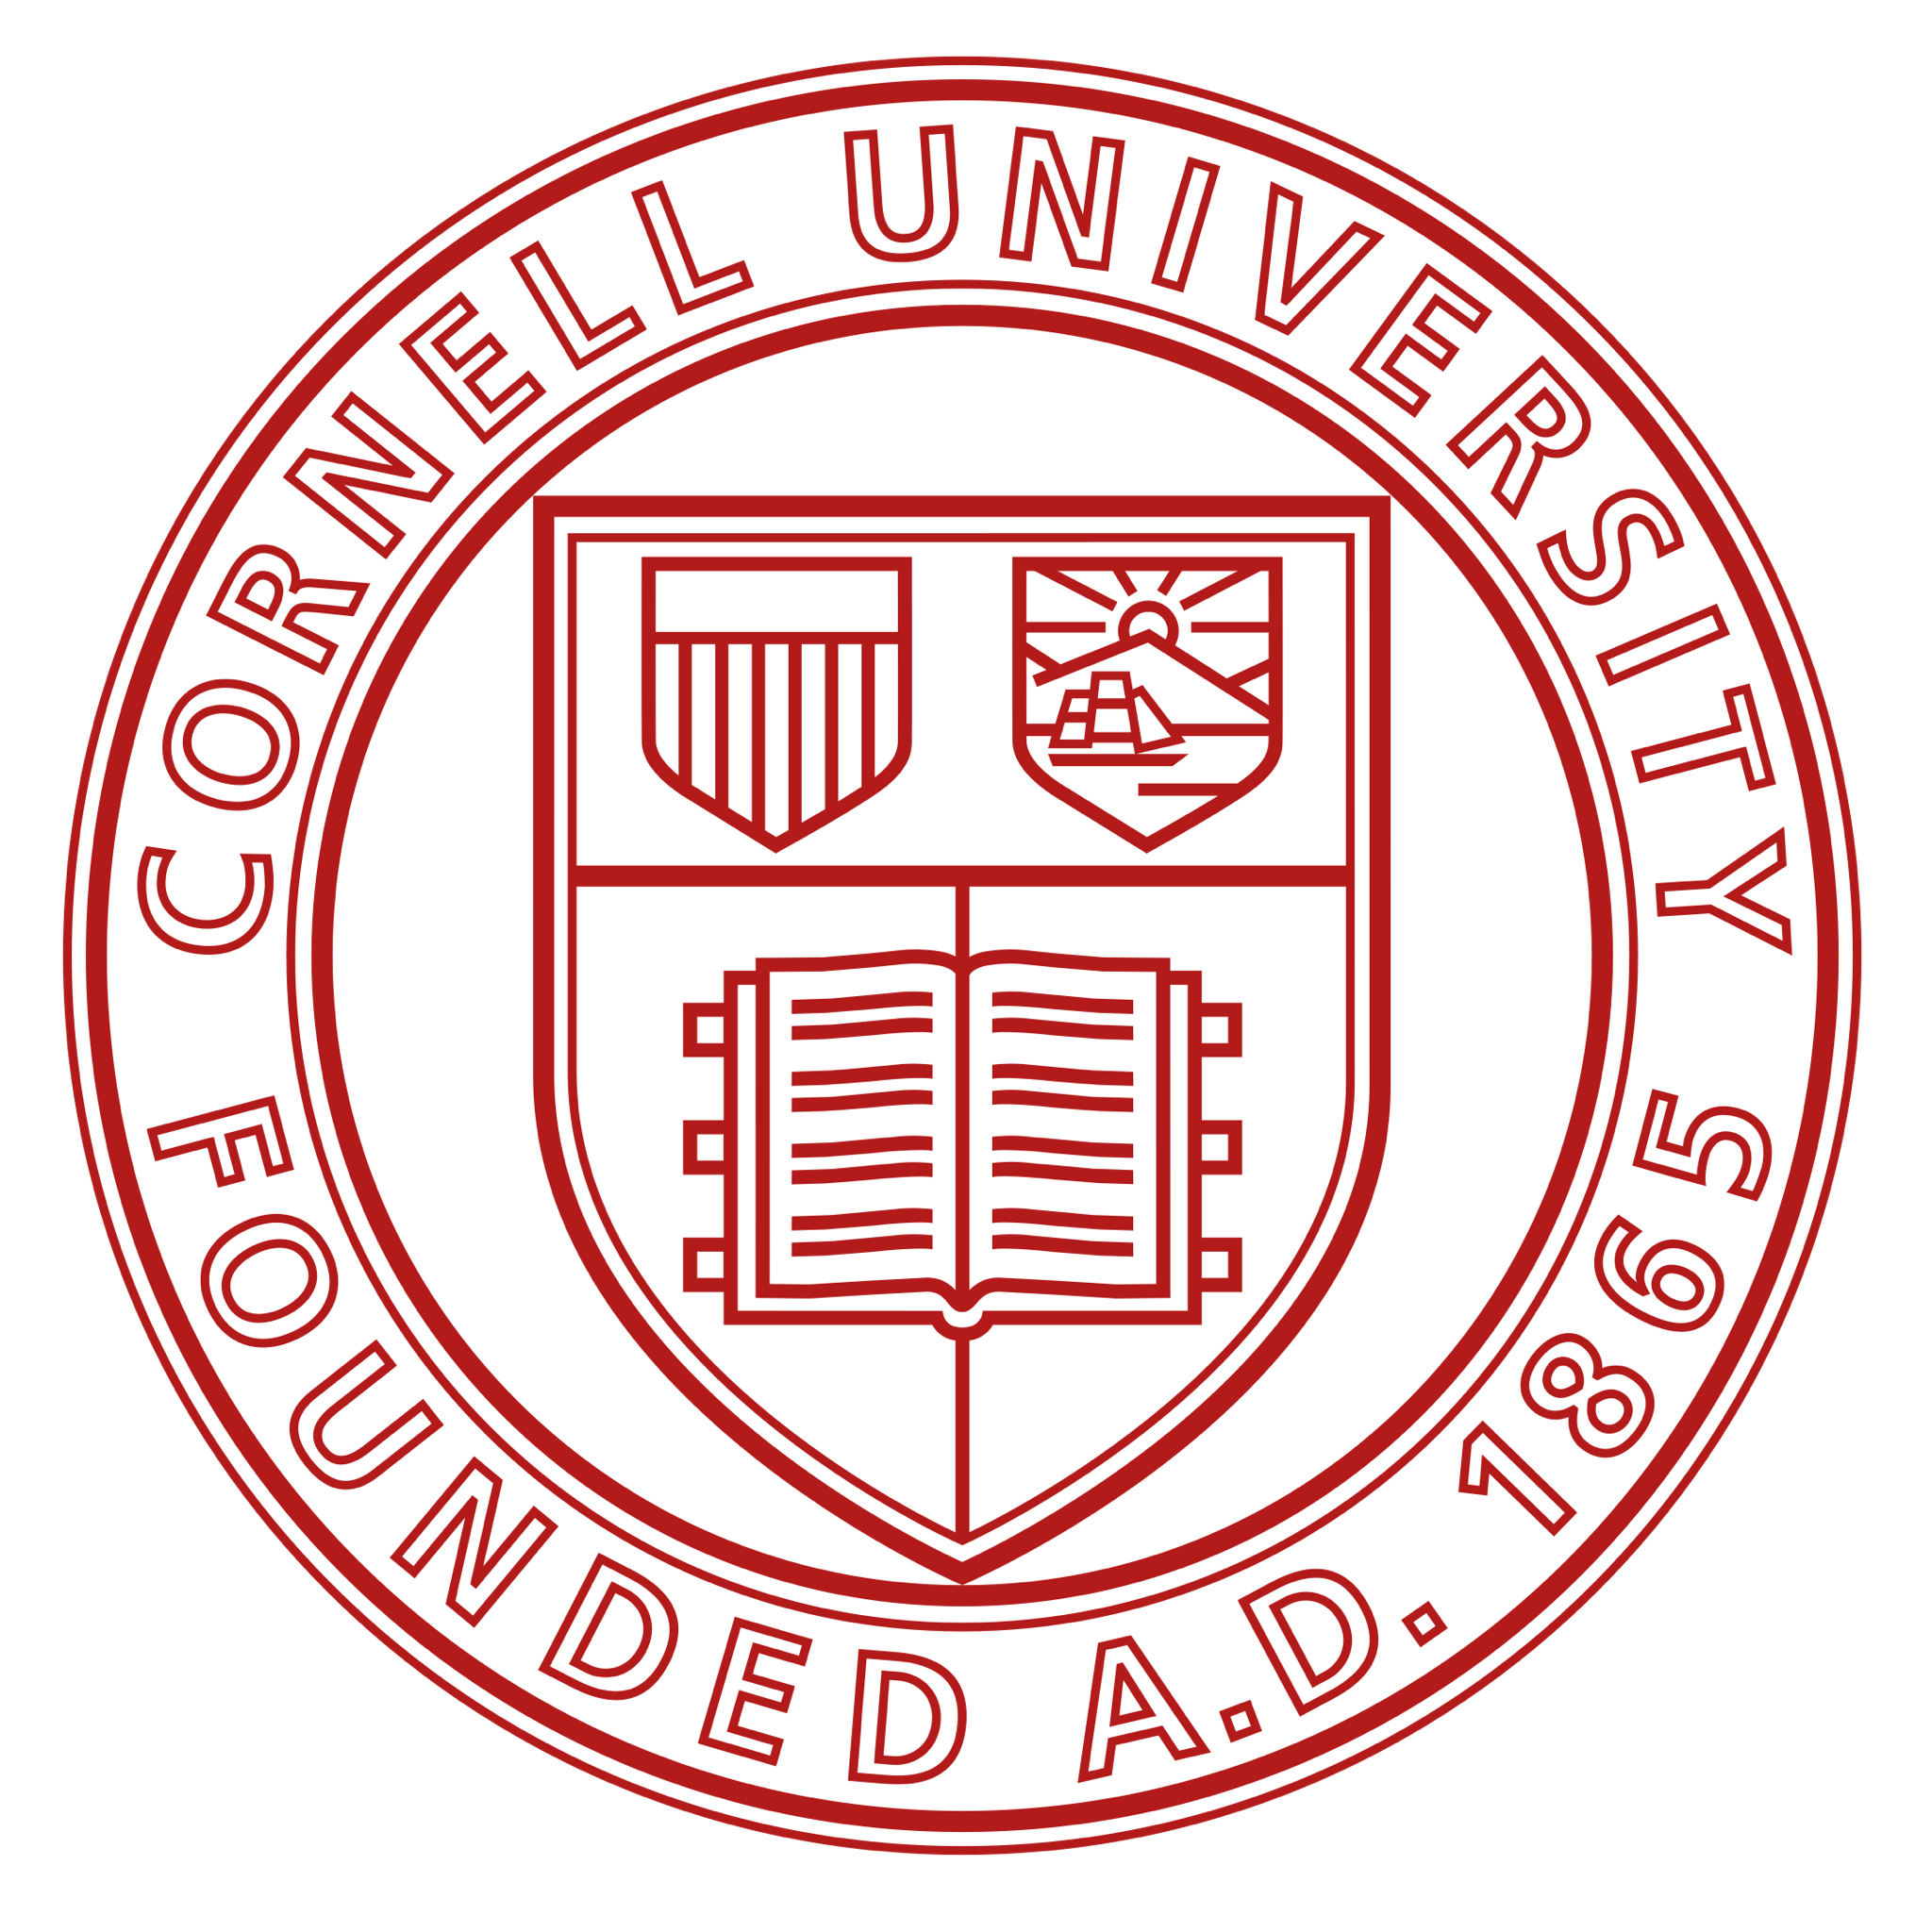 FIND Cornell